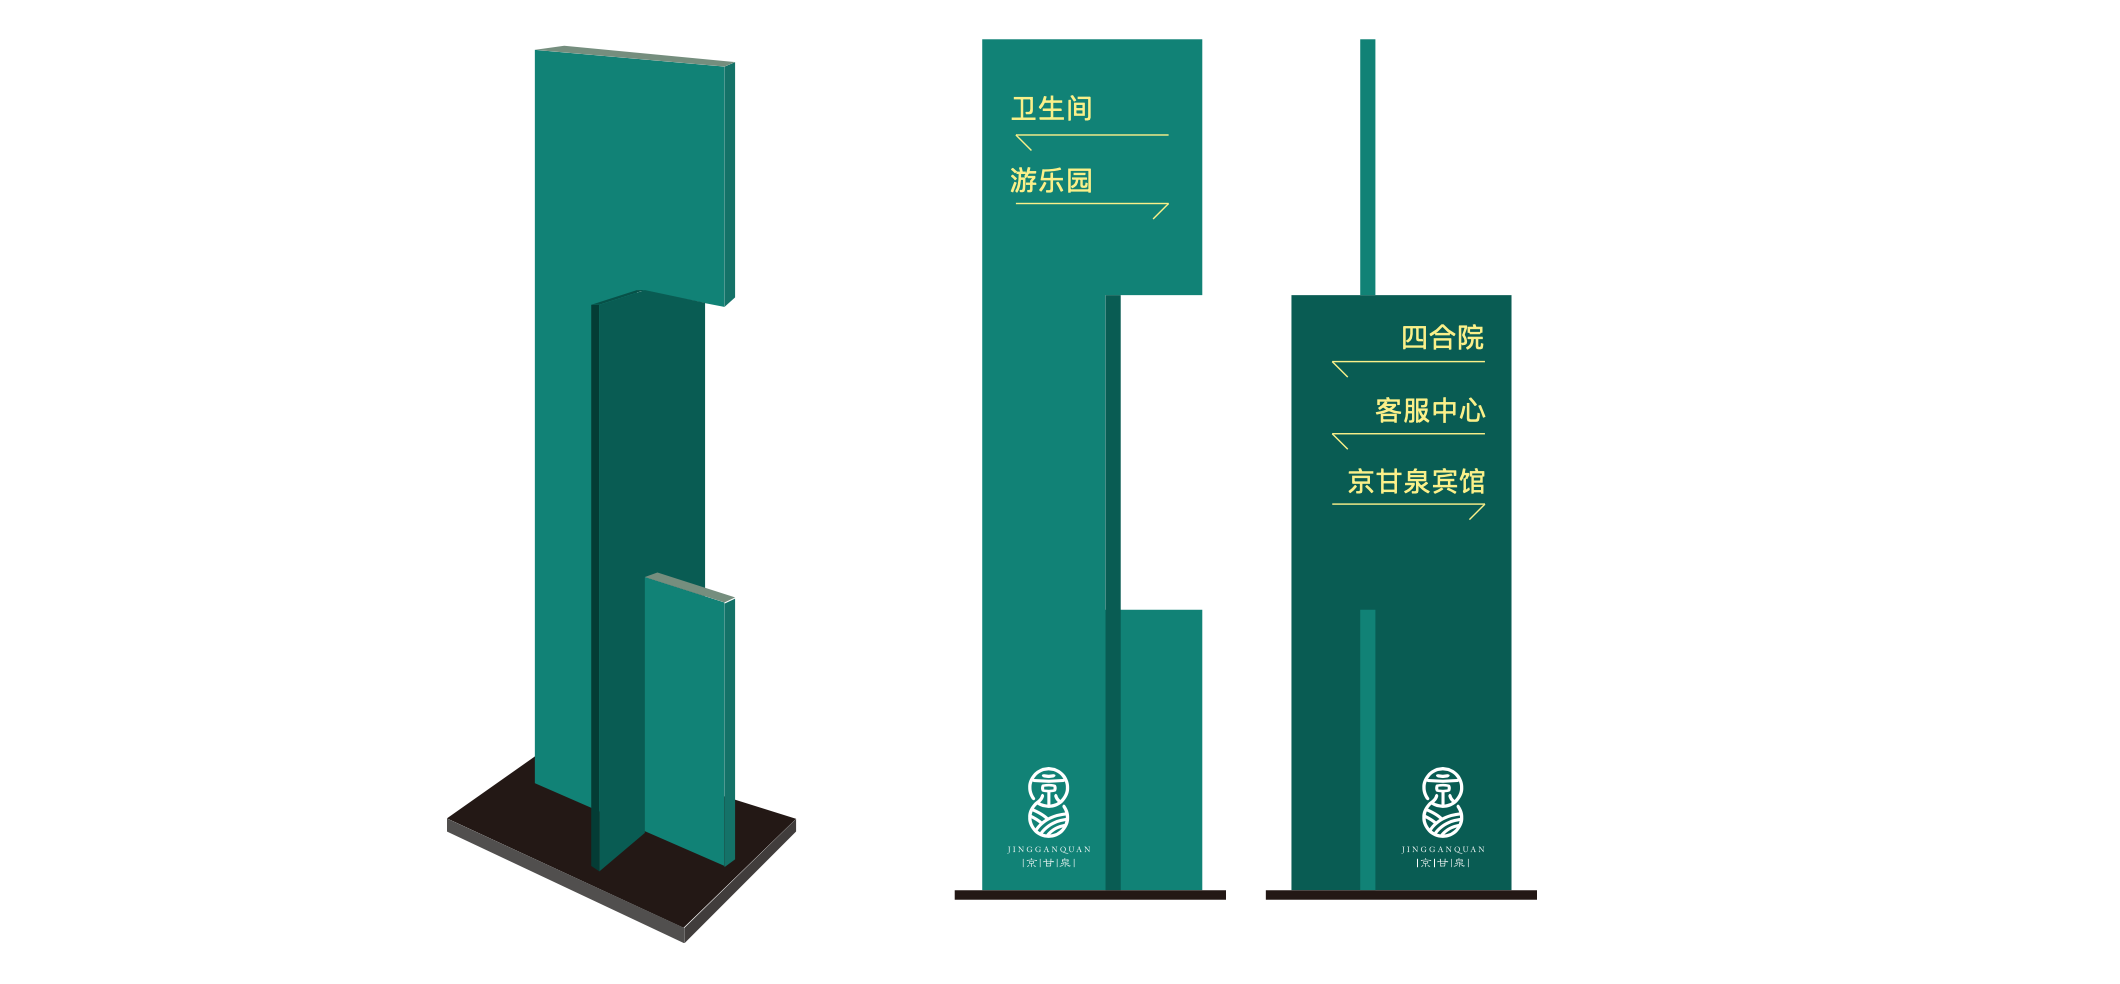 YANGZHOU Jingganquan ceoseience_park brand_design